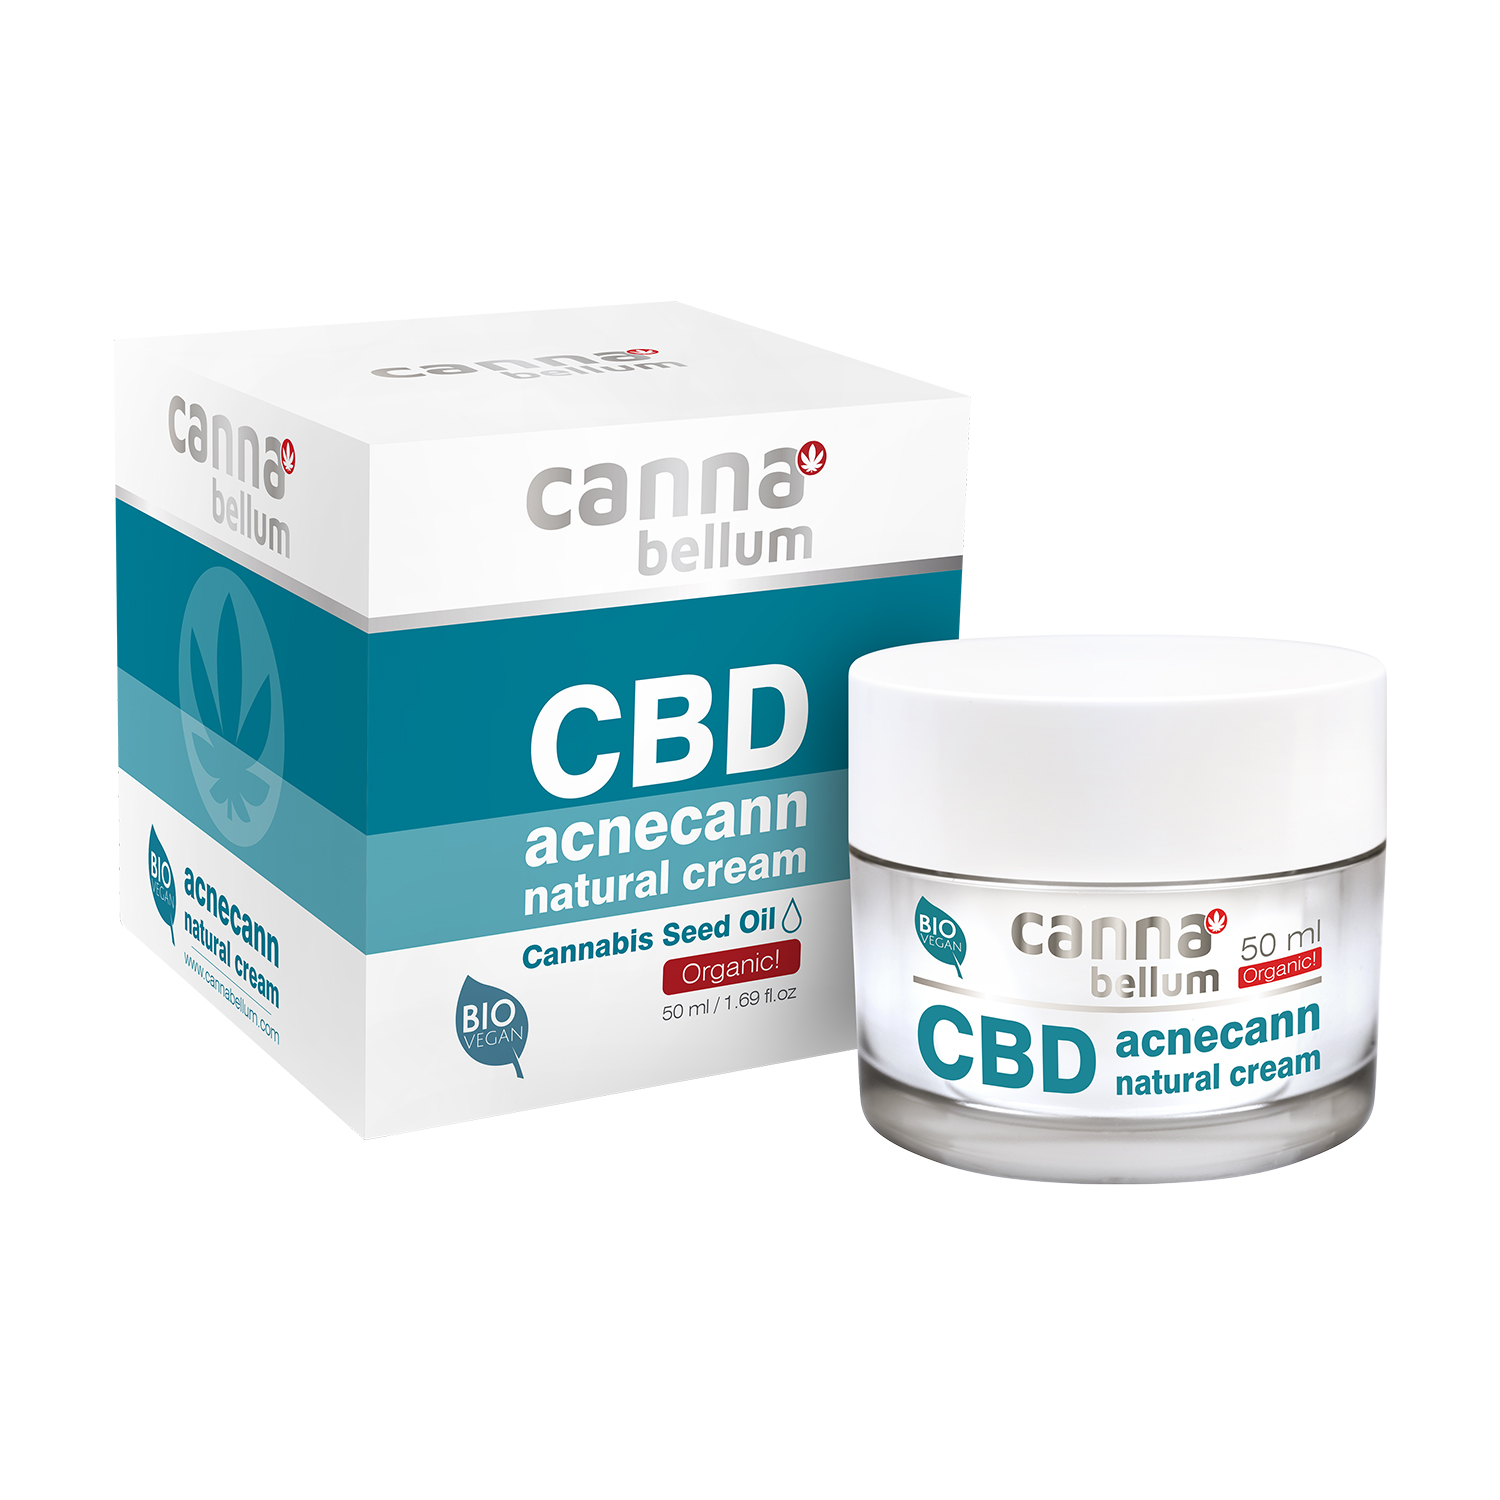 Cannabellum CBD acnecann natural cream 50ml P1244 komplet WEB 111